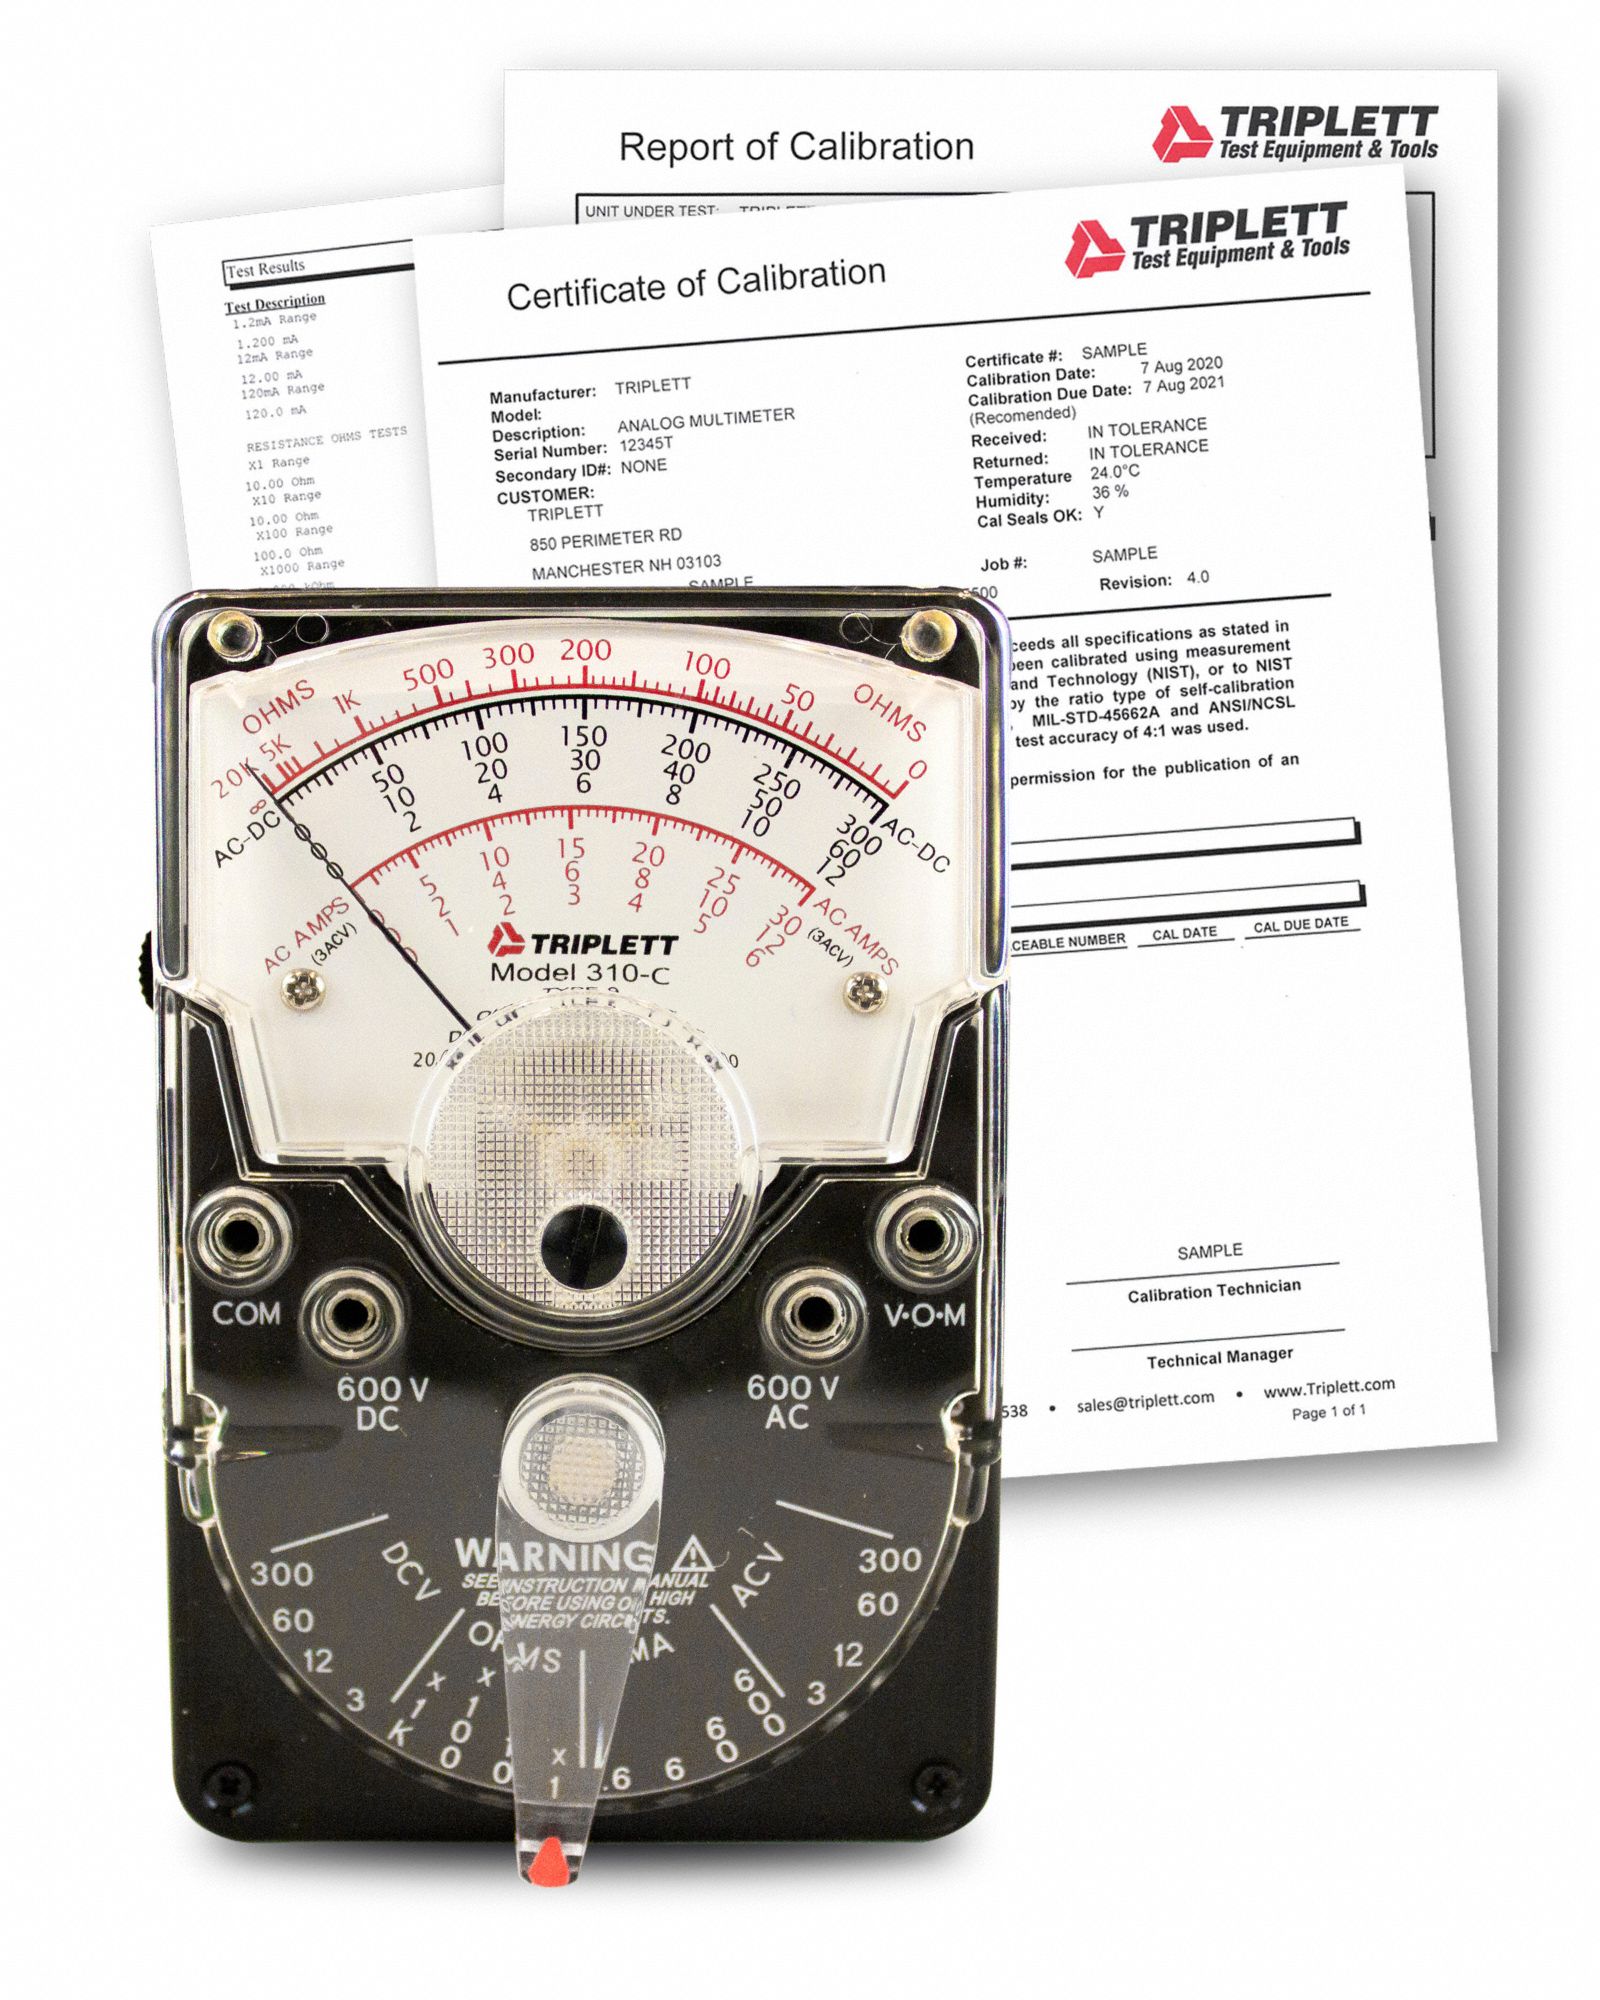 TRIPLETT Analog Multimeter: Calibration Certificate Included, 600 V Max AC  Volt Measurement